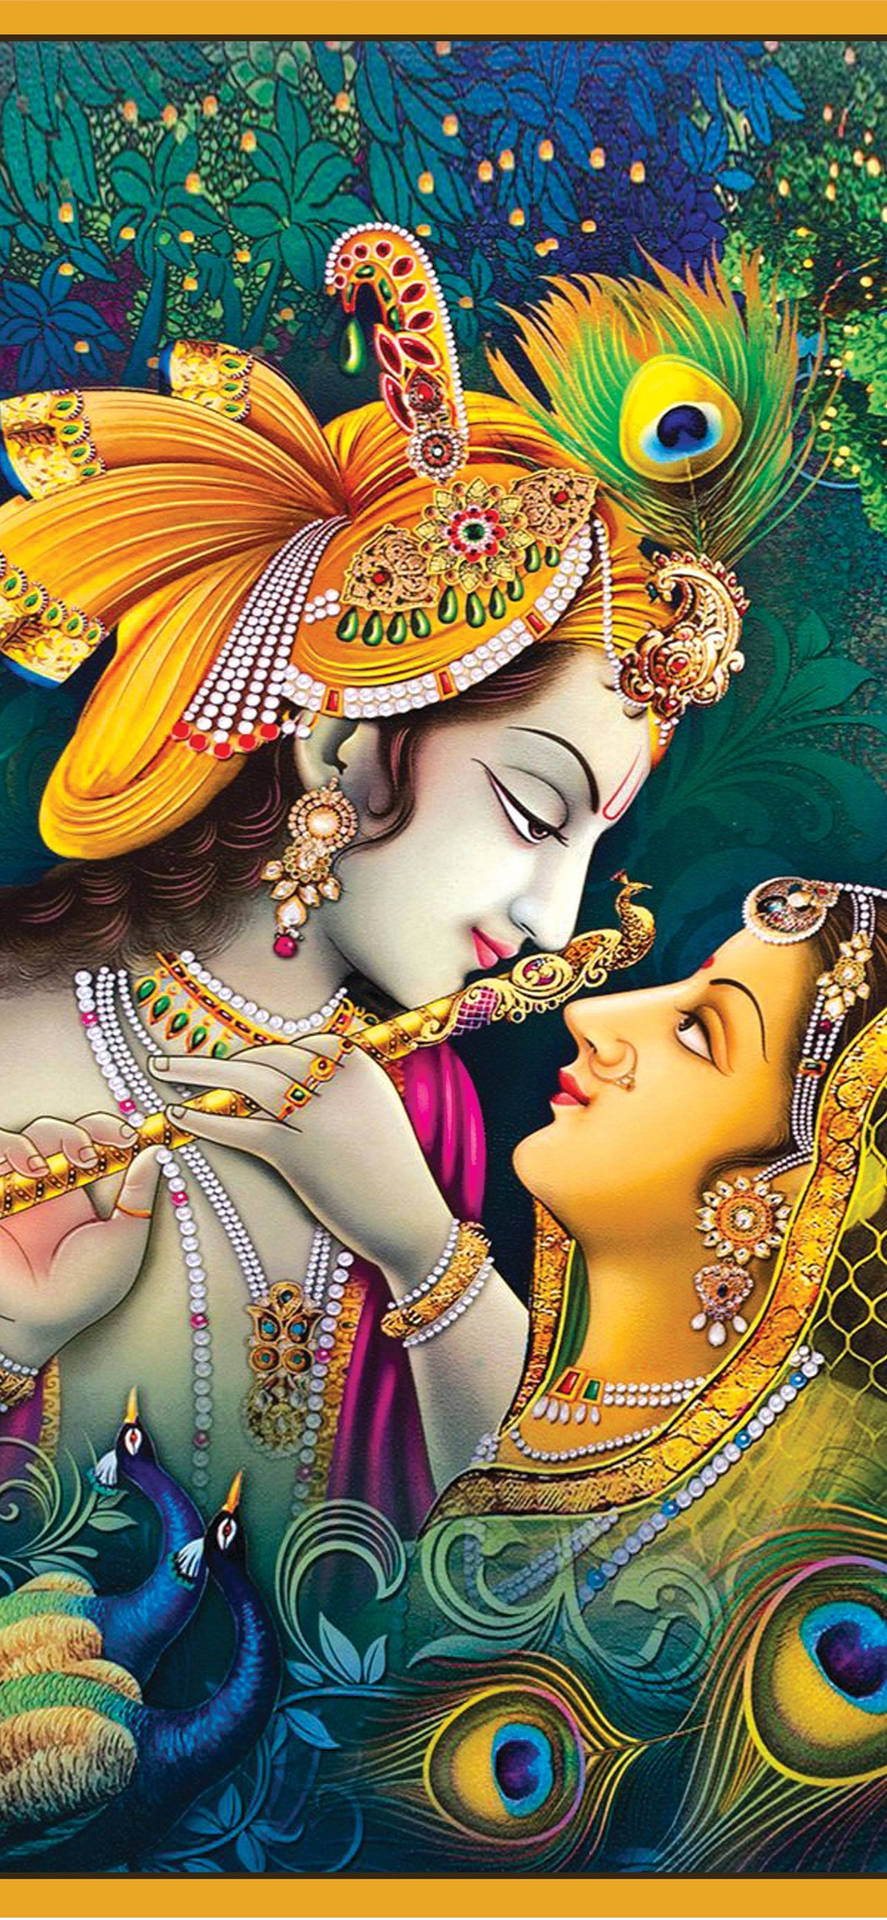 Krishna Bhagwan And Radha Face-to-face Background